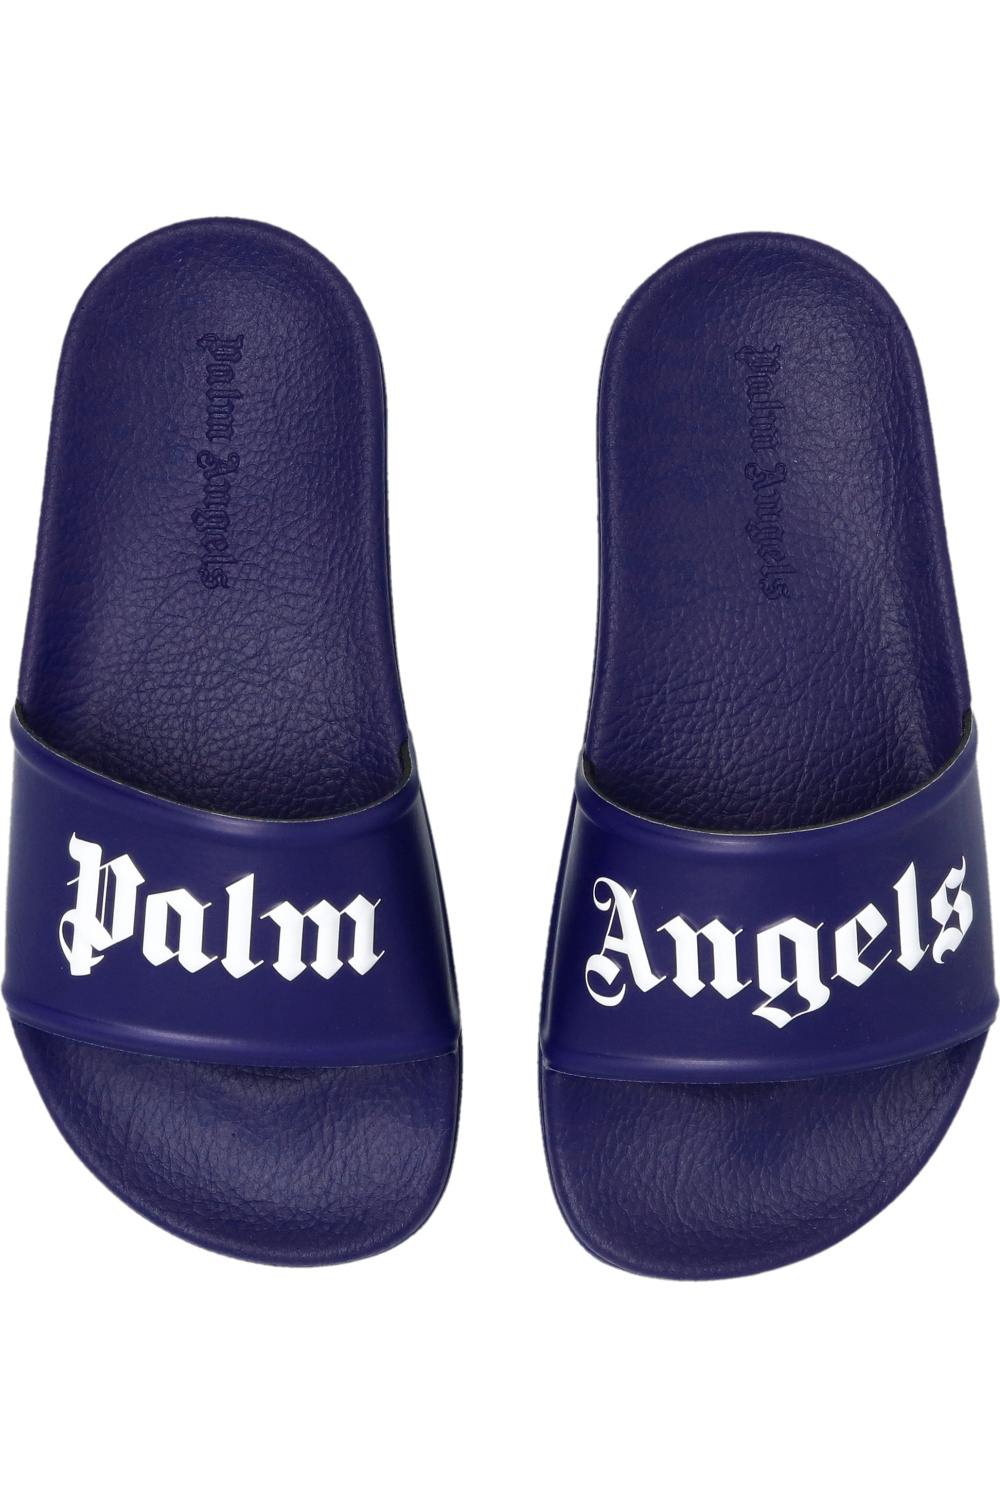 Palm Angels Kids Shoes TAMARIS 1-22410-27 Navy 805